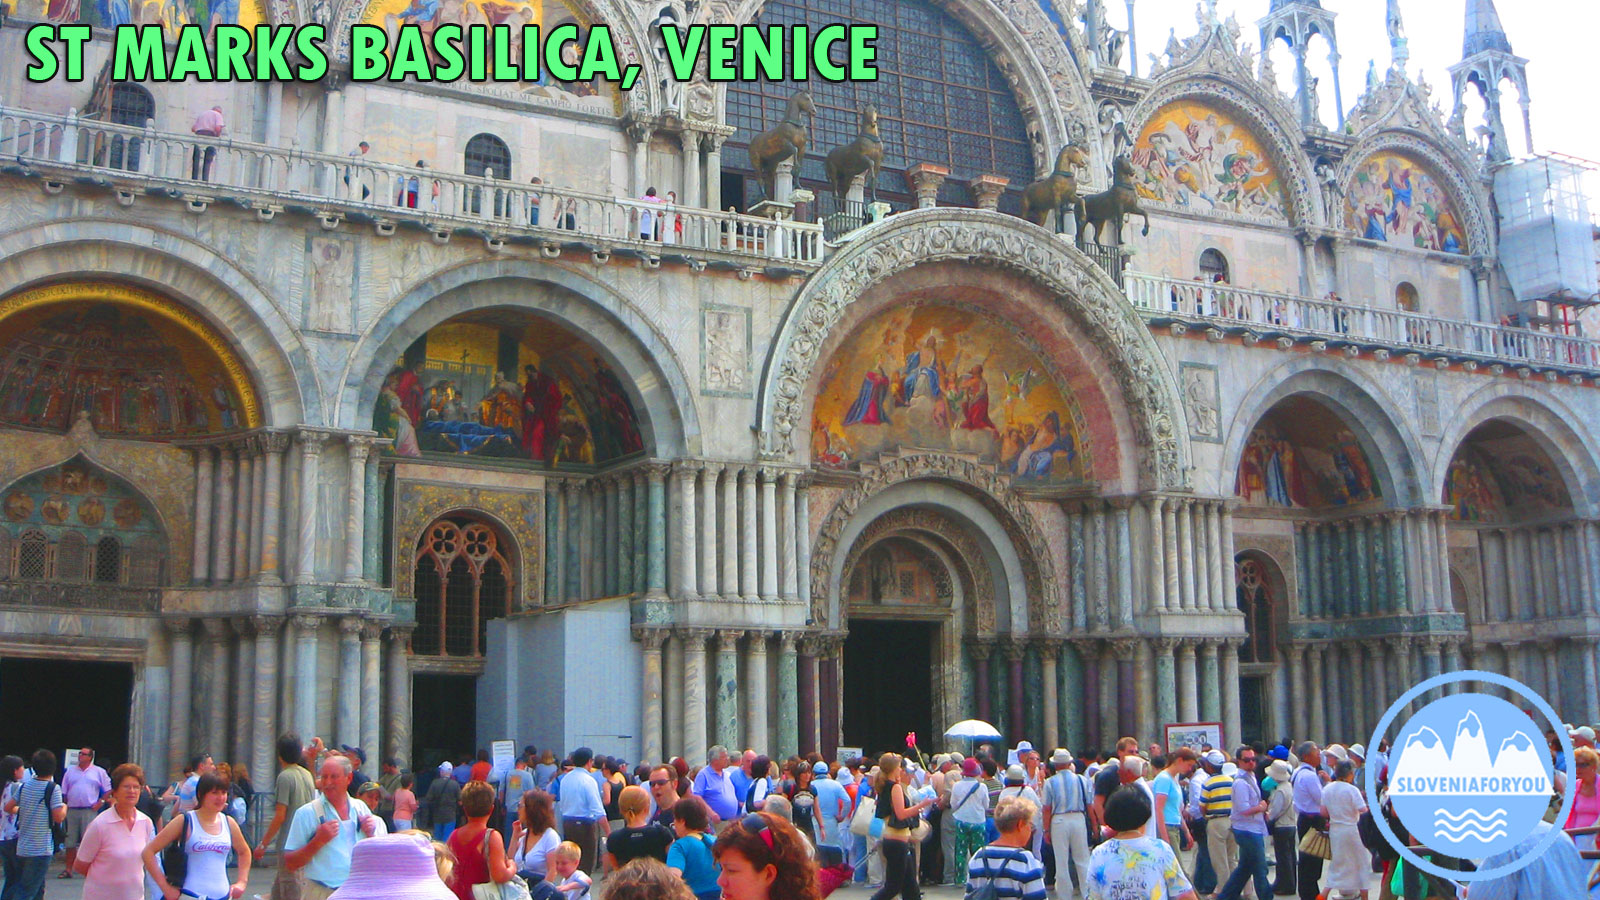 Stunning St Marks Basilica, Venice, Sloveniaforyou